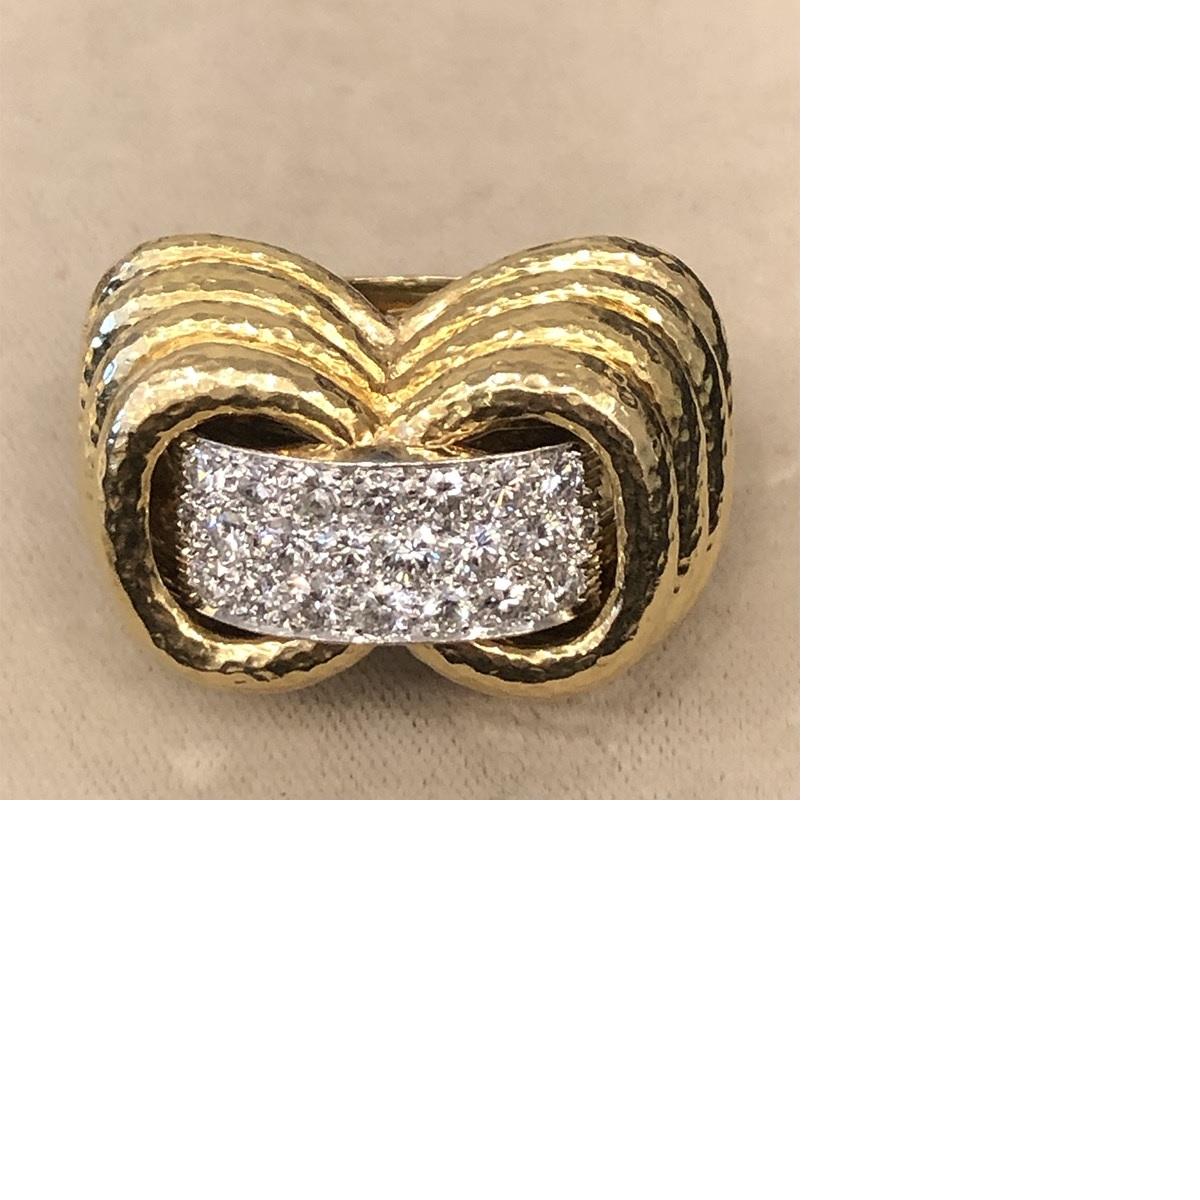 Brilliant Cut Gold, Platinum and Diamond Ring by David Webb